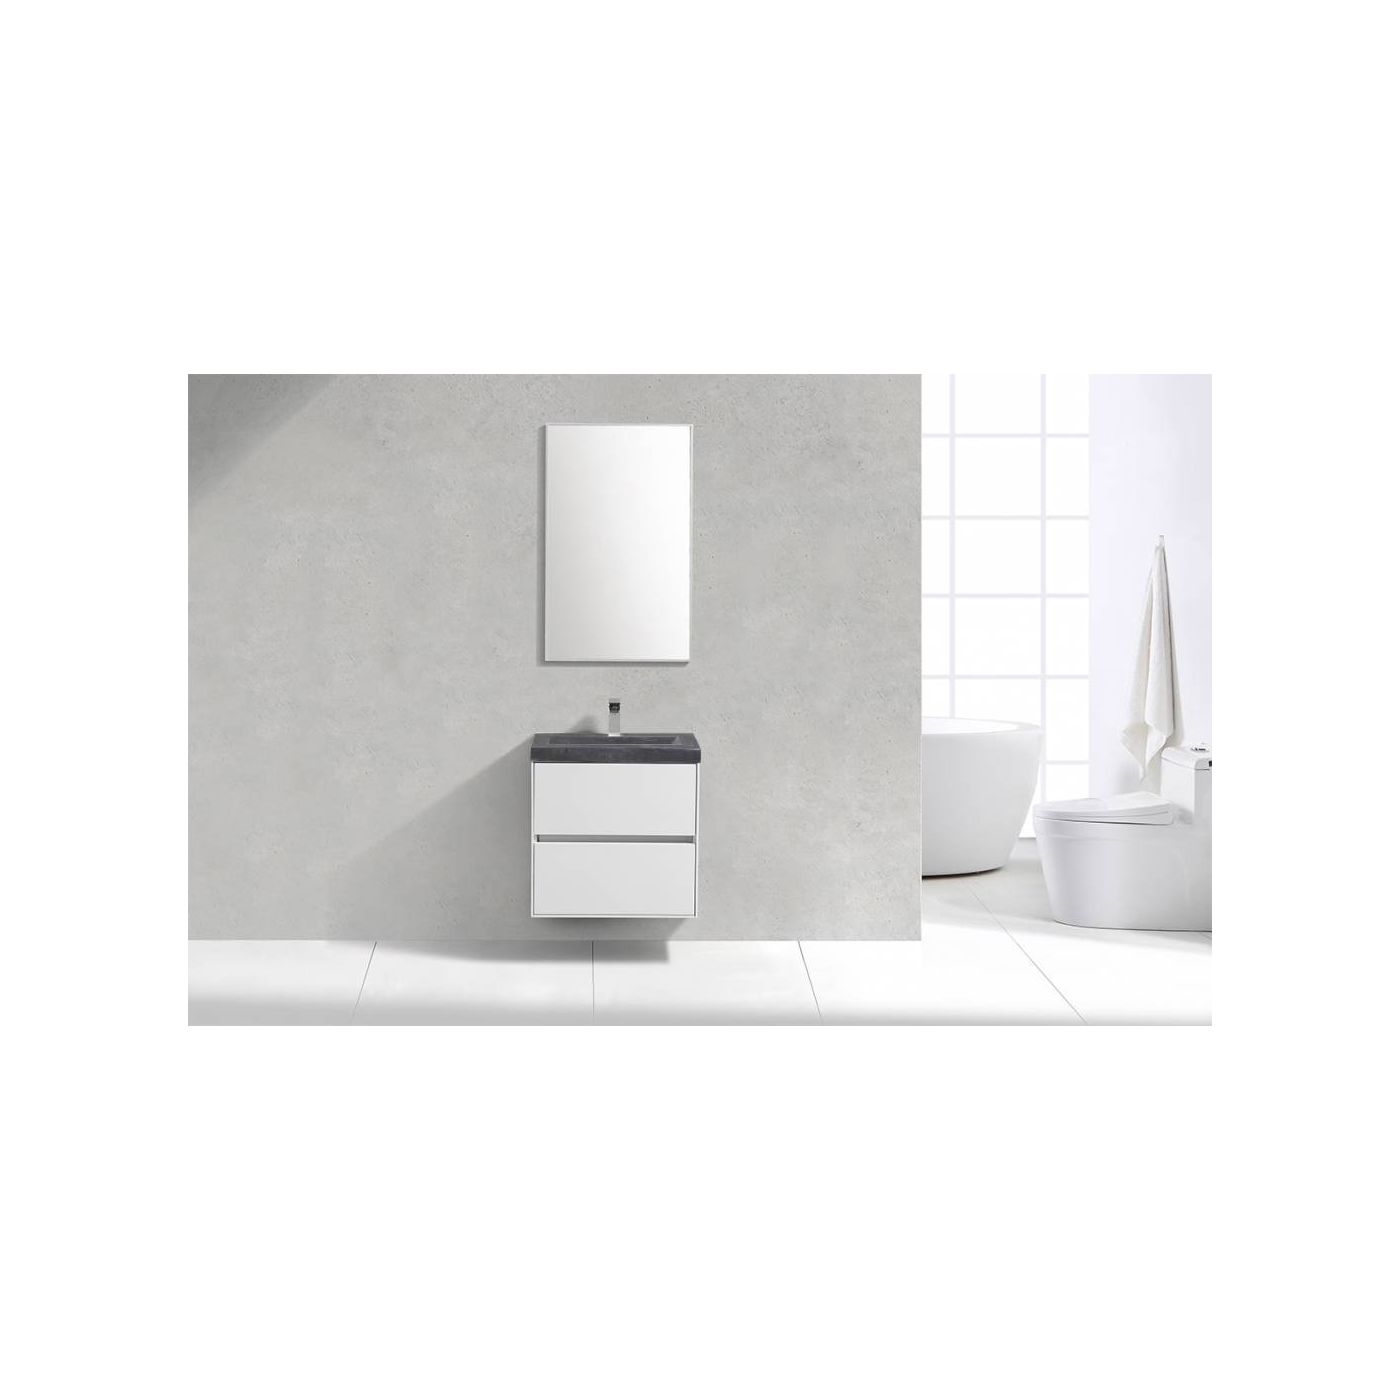 Neuer Compact badkamermeubel Stone wastafel met kraangat 60 glans wit